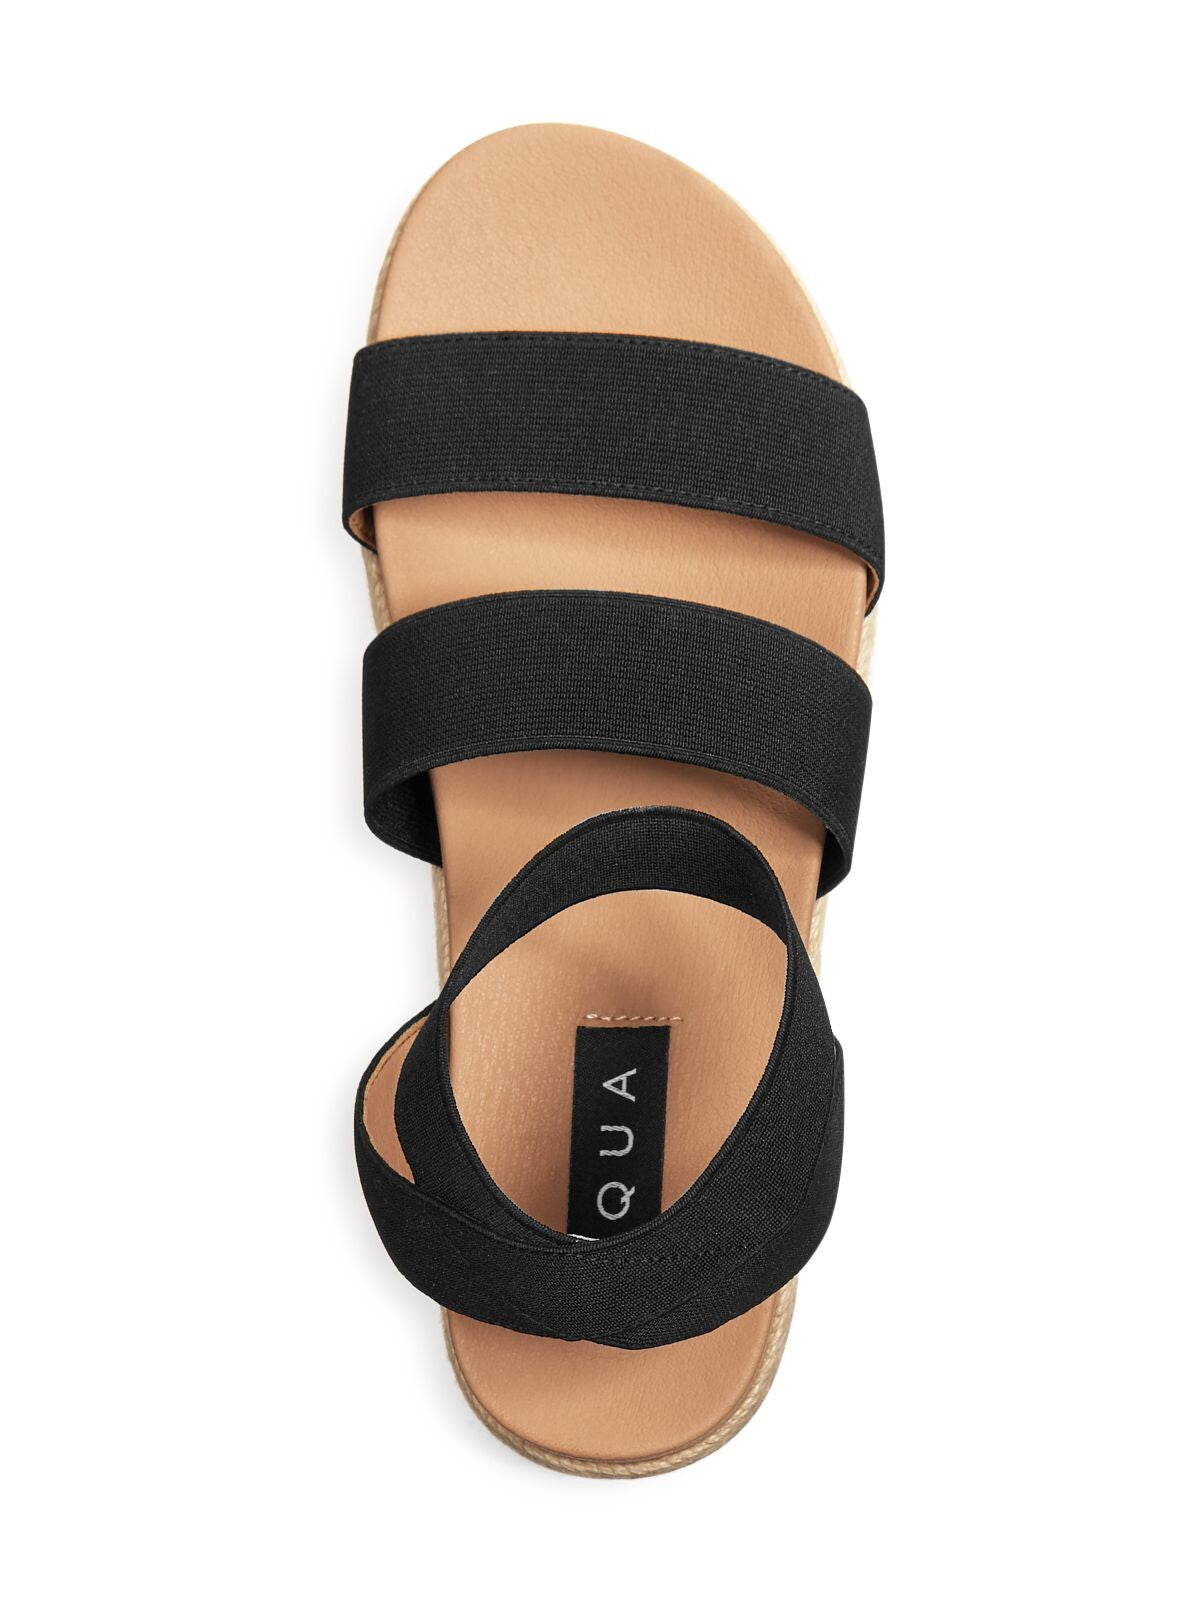 AQUA Womens Black Jute Accent Stretch Ankle Strap Tali Round Toe Platform Slip On Espadrille Shoes M